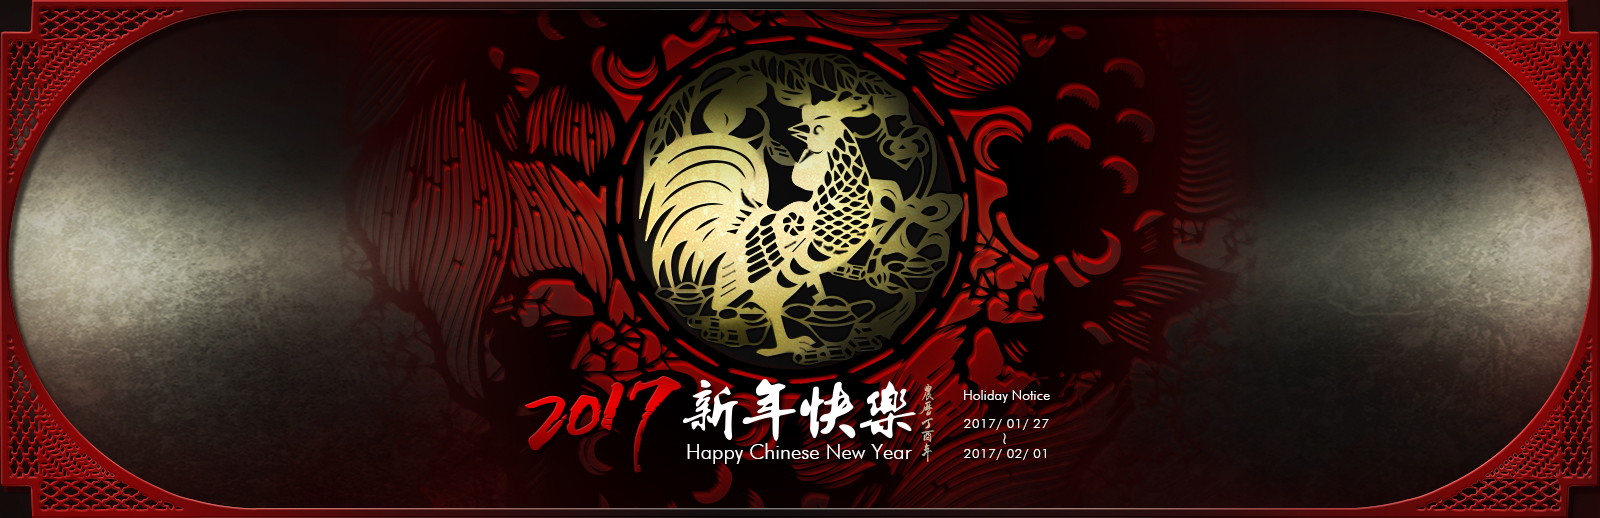 2015 Happy Chinese New Year